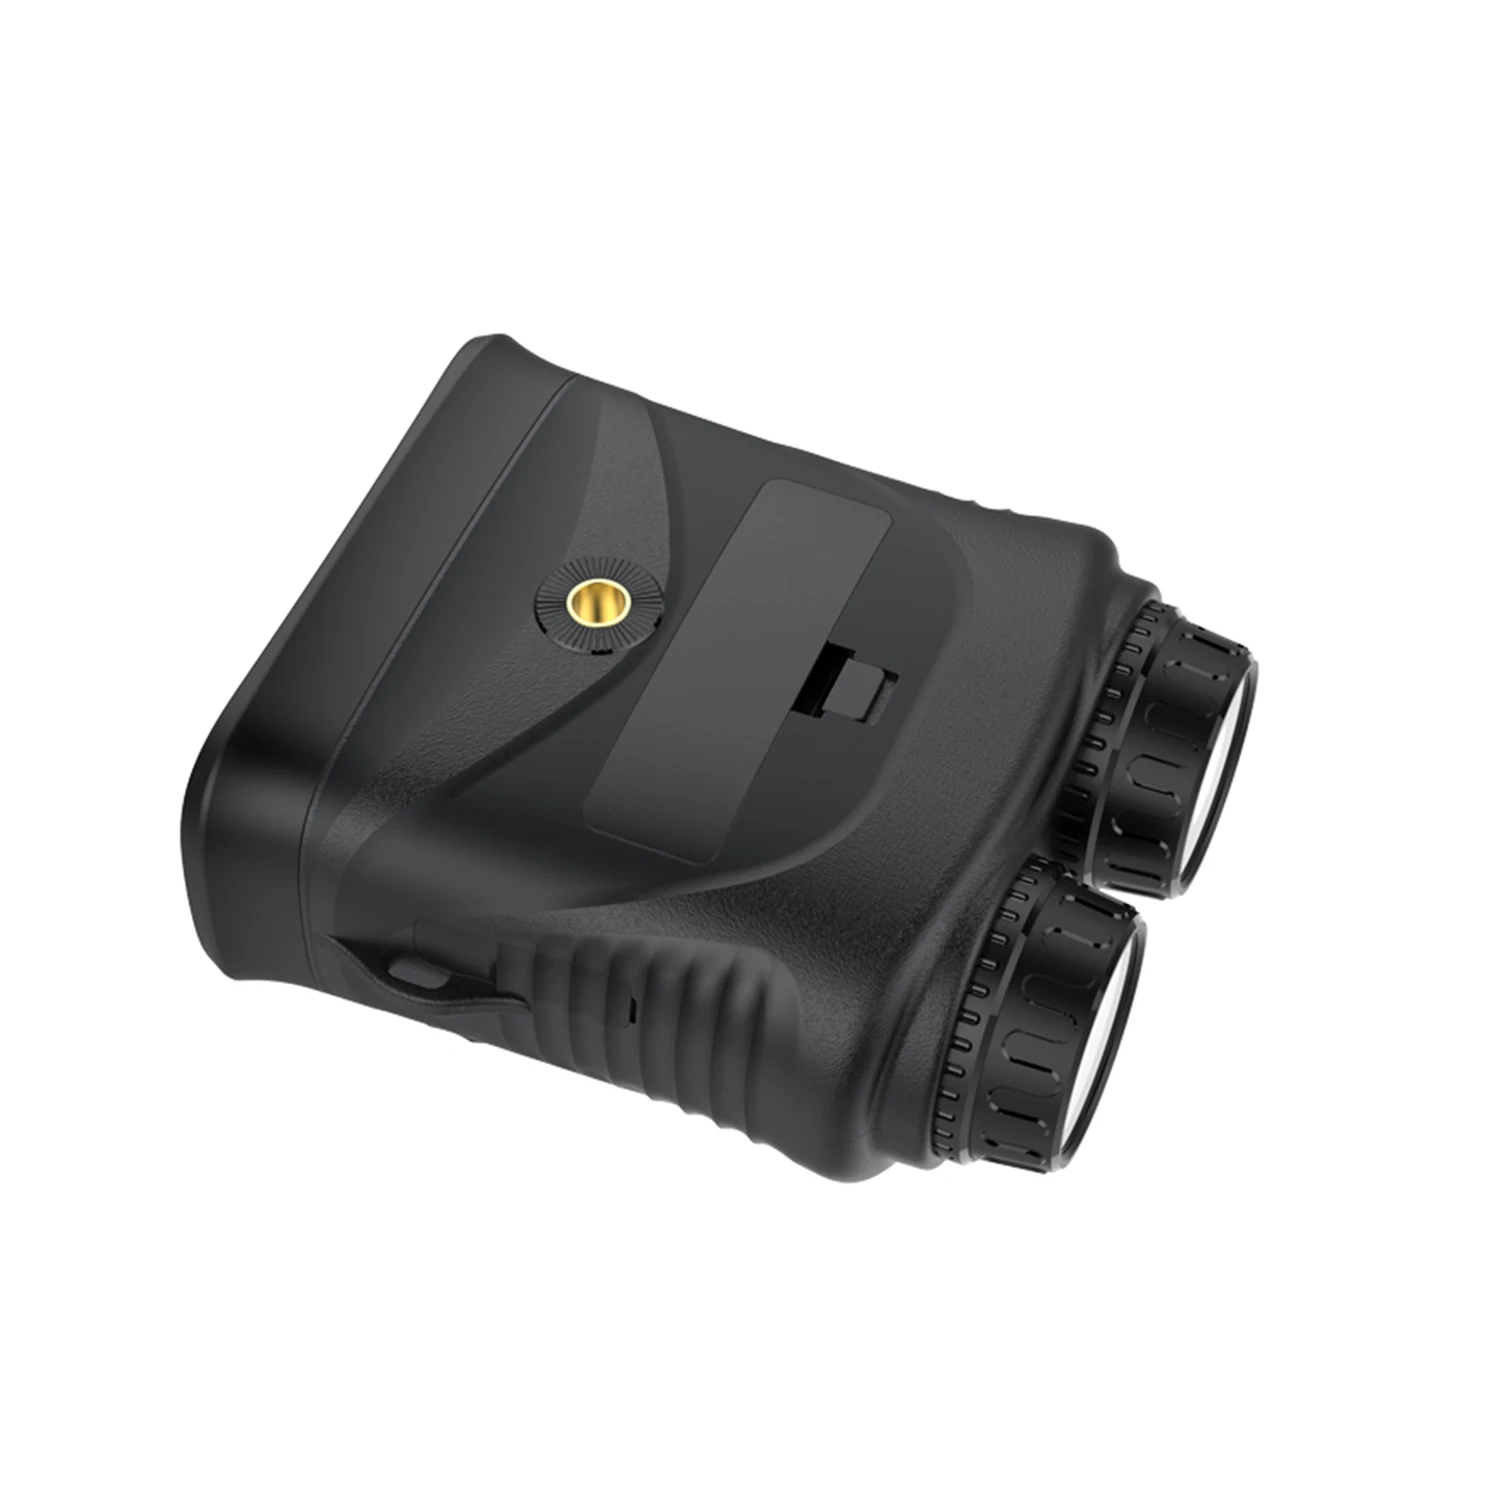 Powerful IR illuminator 350 m nv binoculars Backlit Buttons 2.5K digital binoculars 3 inch Display Infrared binoculars digital